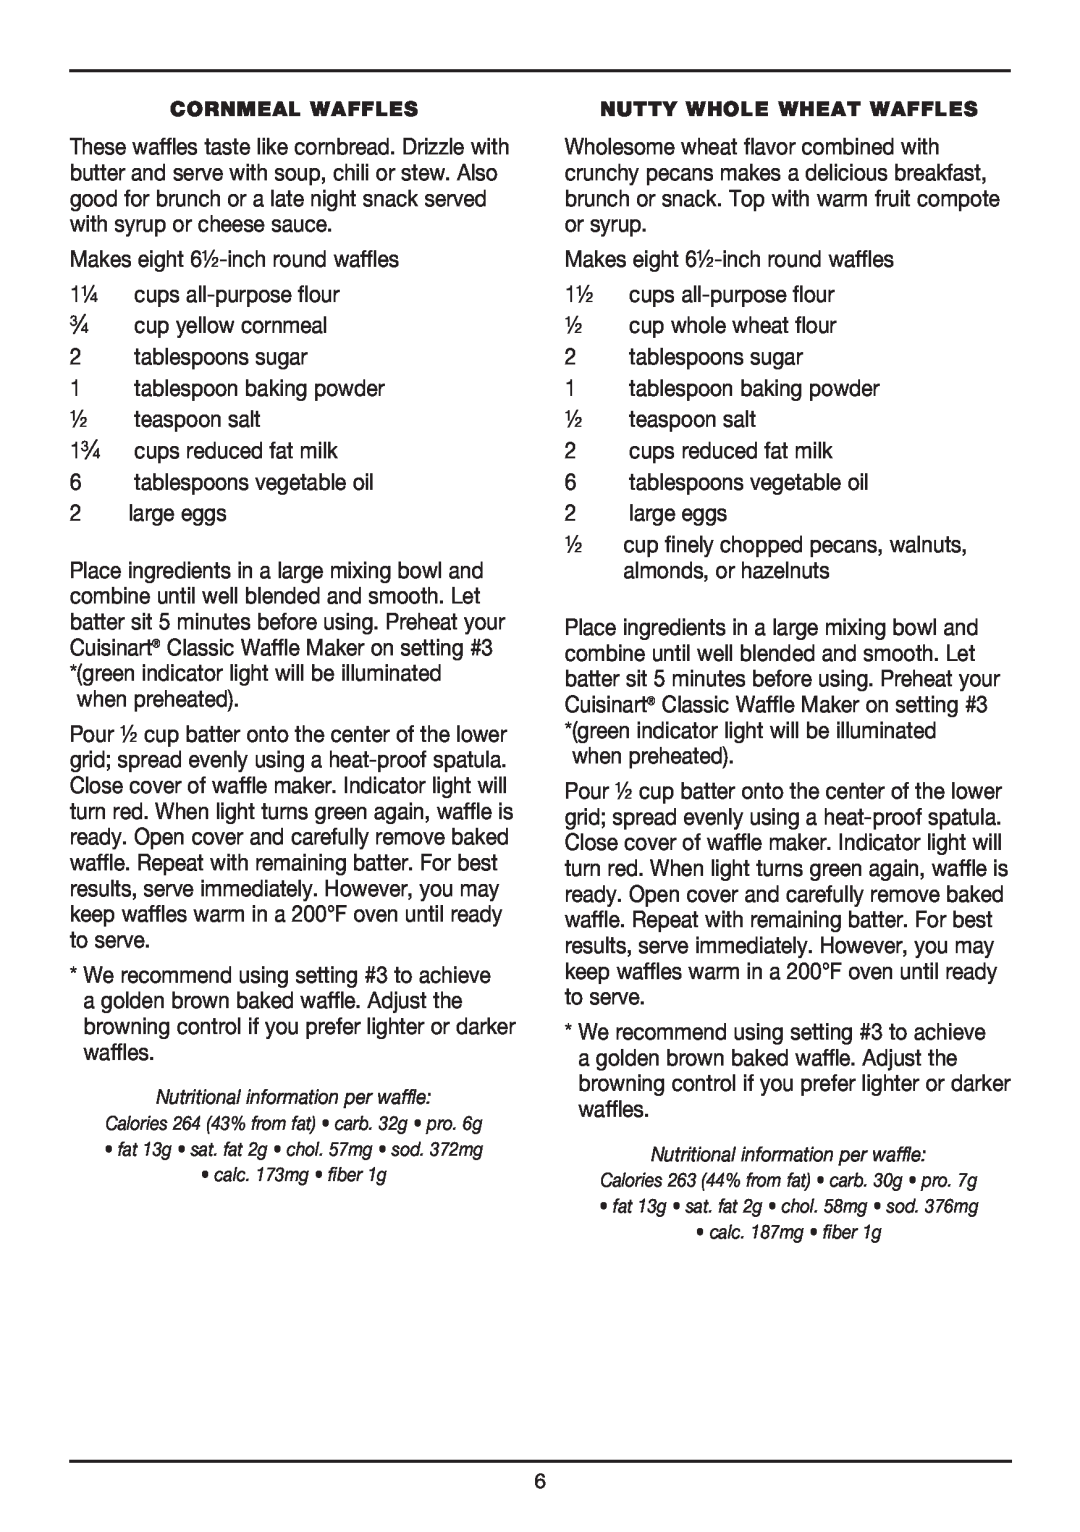 Cuisinart WMR-CA manual 3⁄4 cup yellow cornmeal 2 tablespoons sugar 